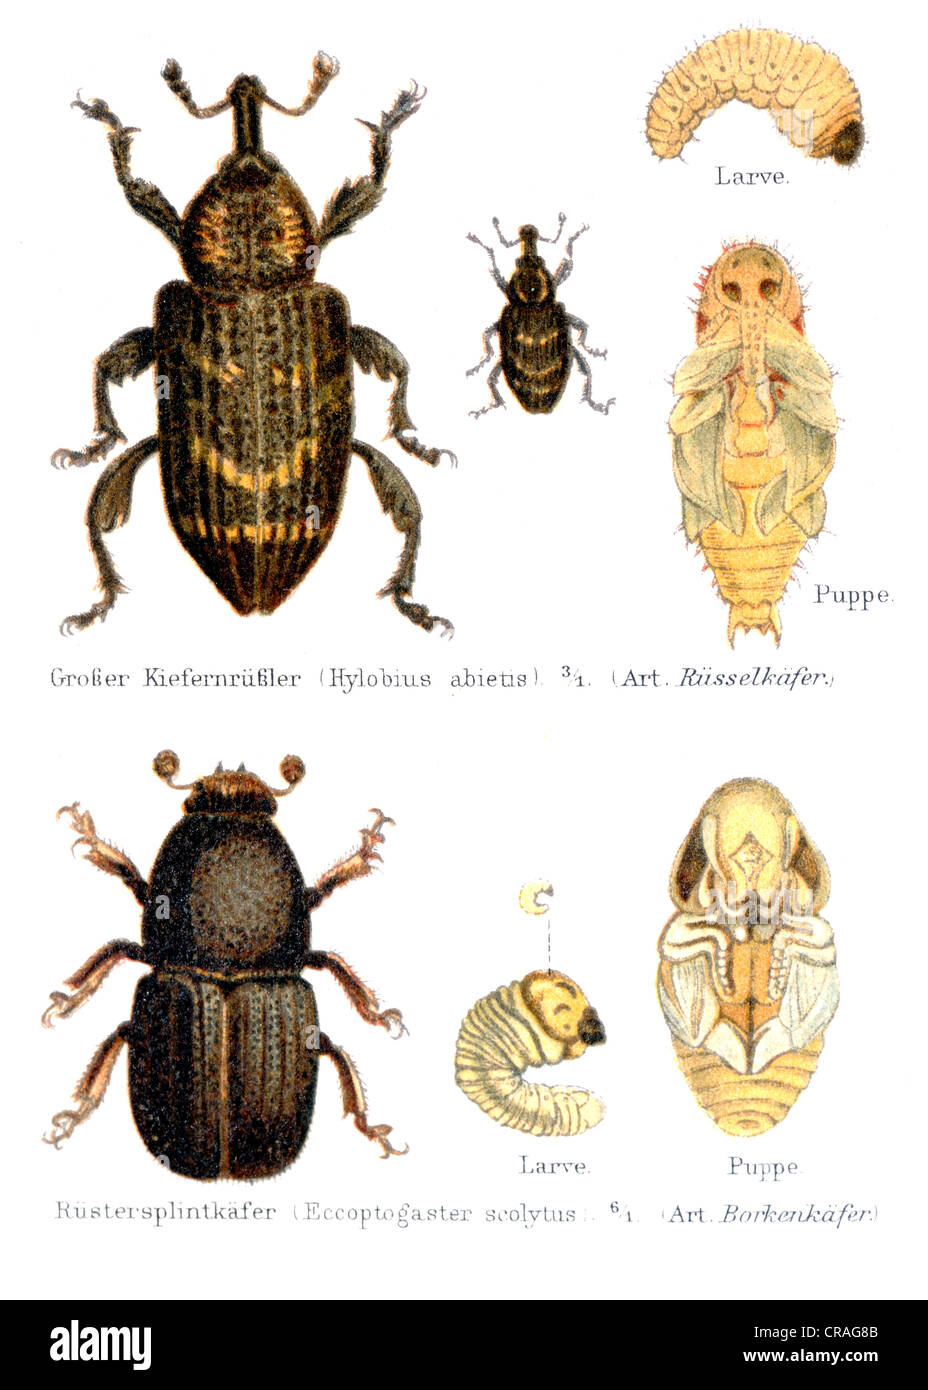 Beetles, a weevil (Pissodes) and a bark beetle (Eccoptogaster scolytus), illustration from Meyers Konversationslexikon Stock Photo